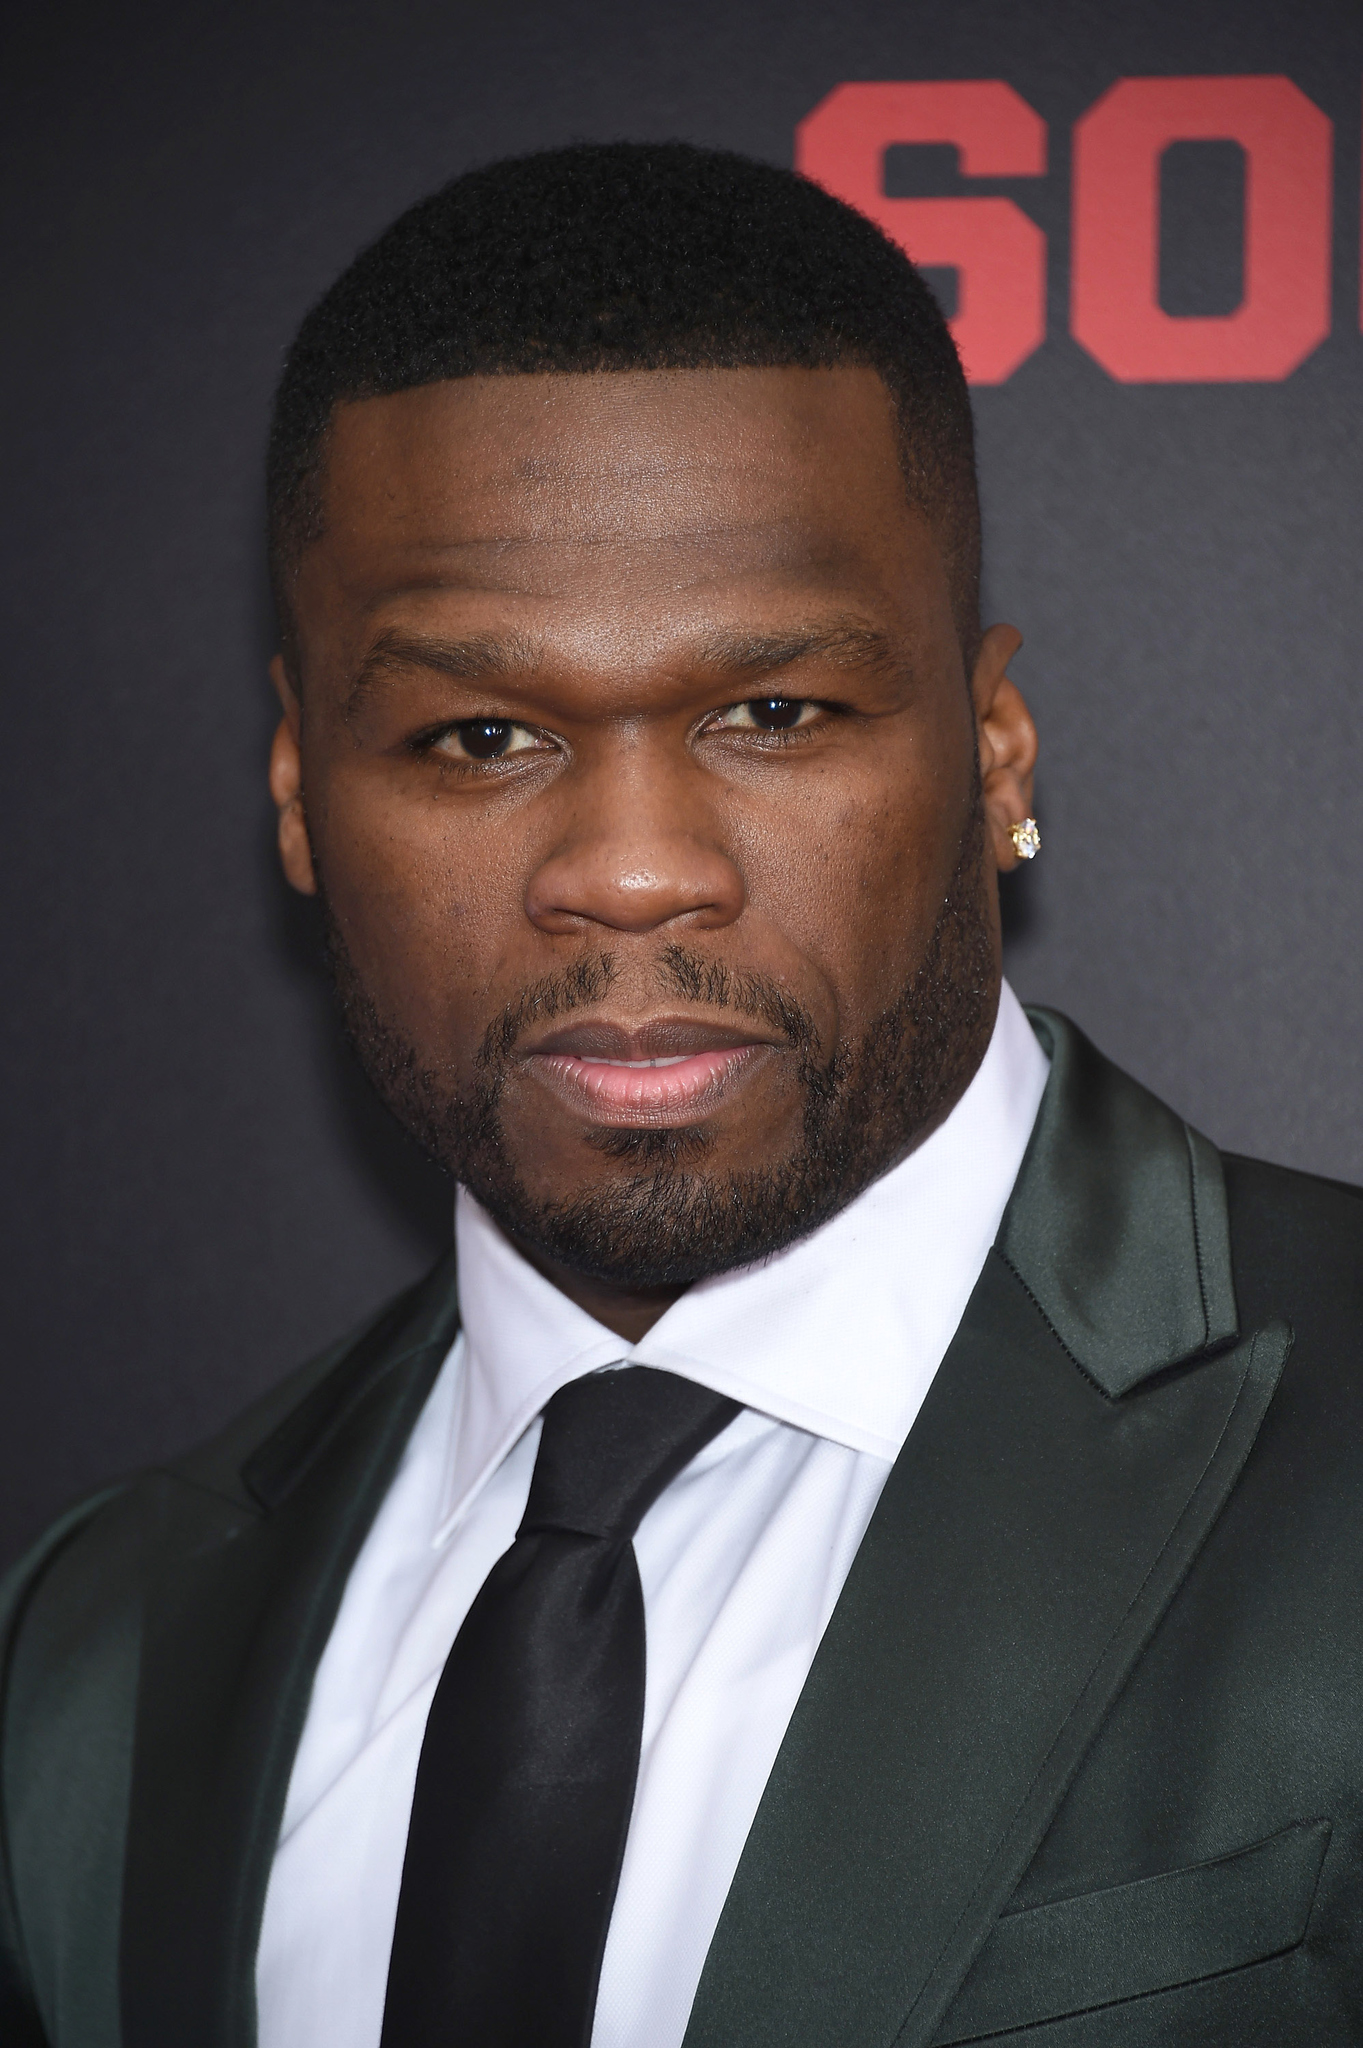  Biografi 50 Cent